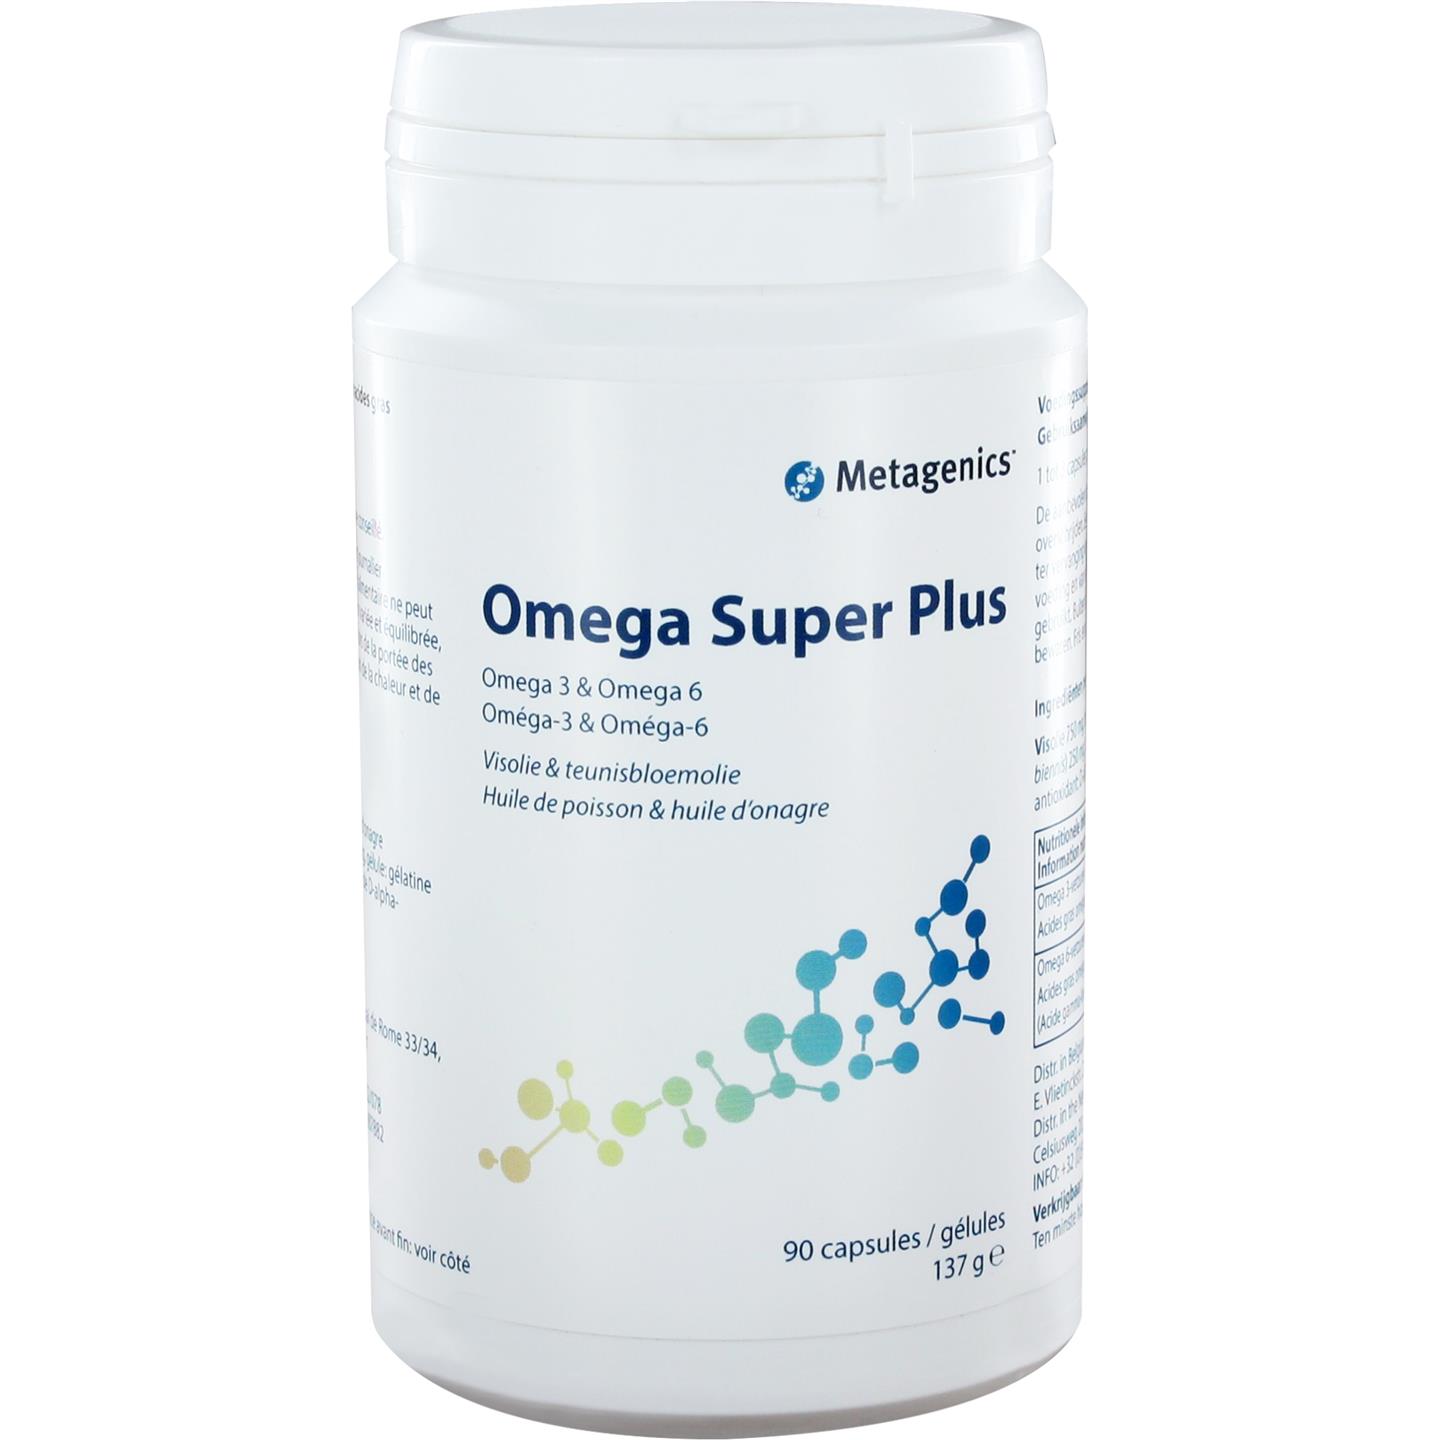 Omega Super Plus